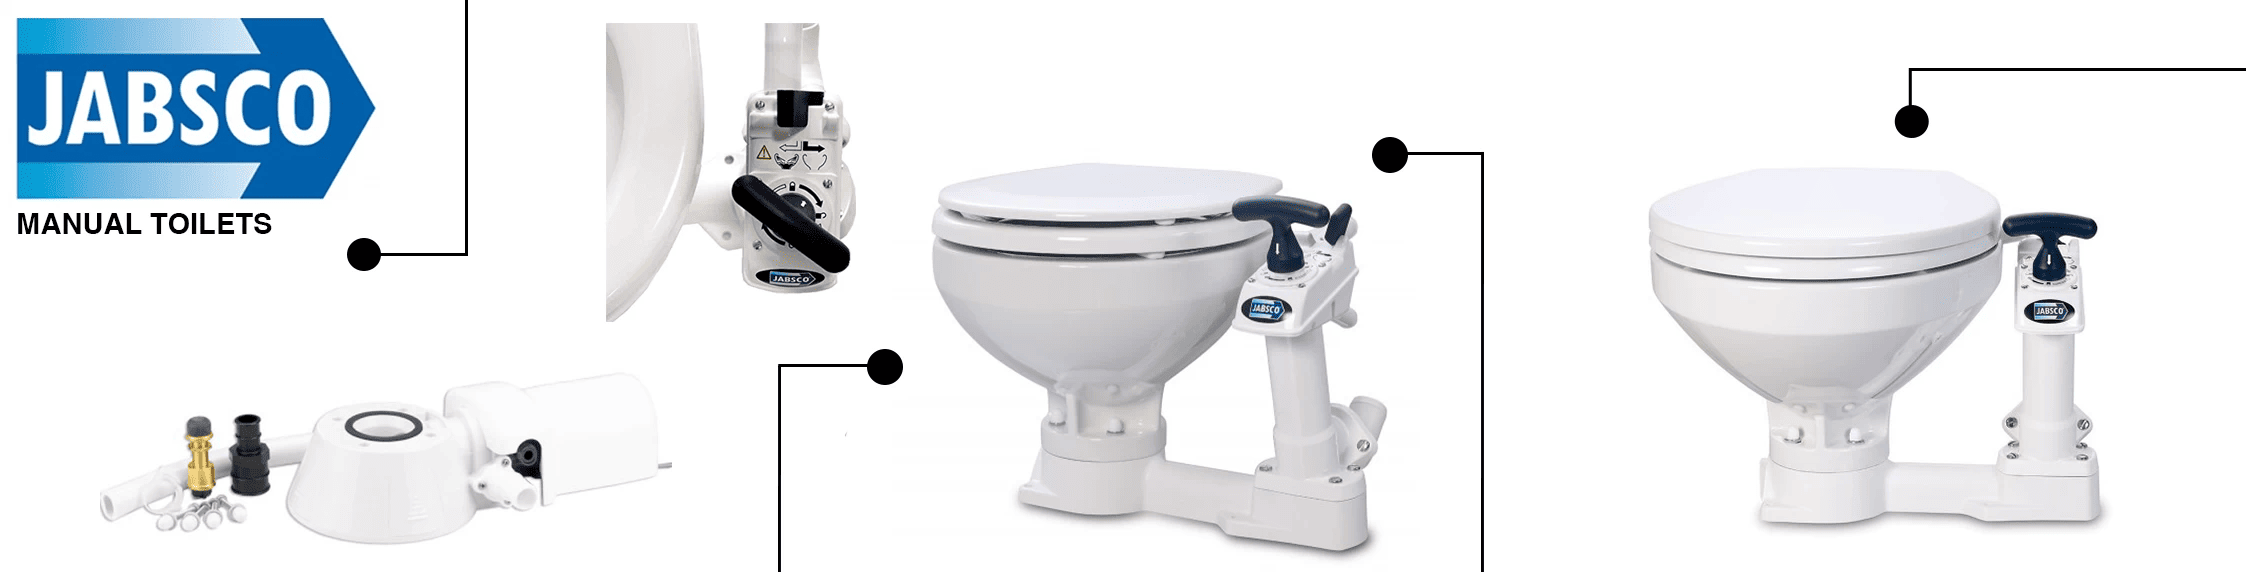 Jabsco Manual Marine Toilets